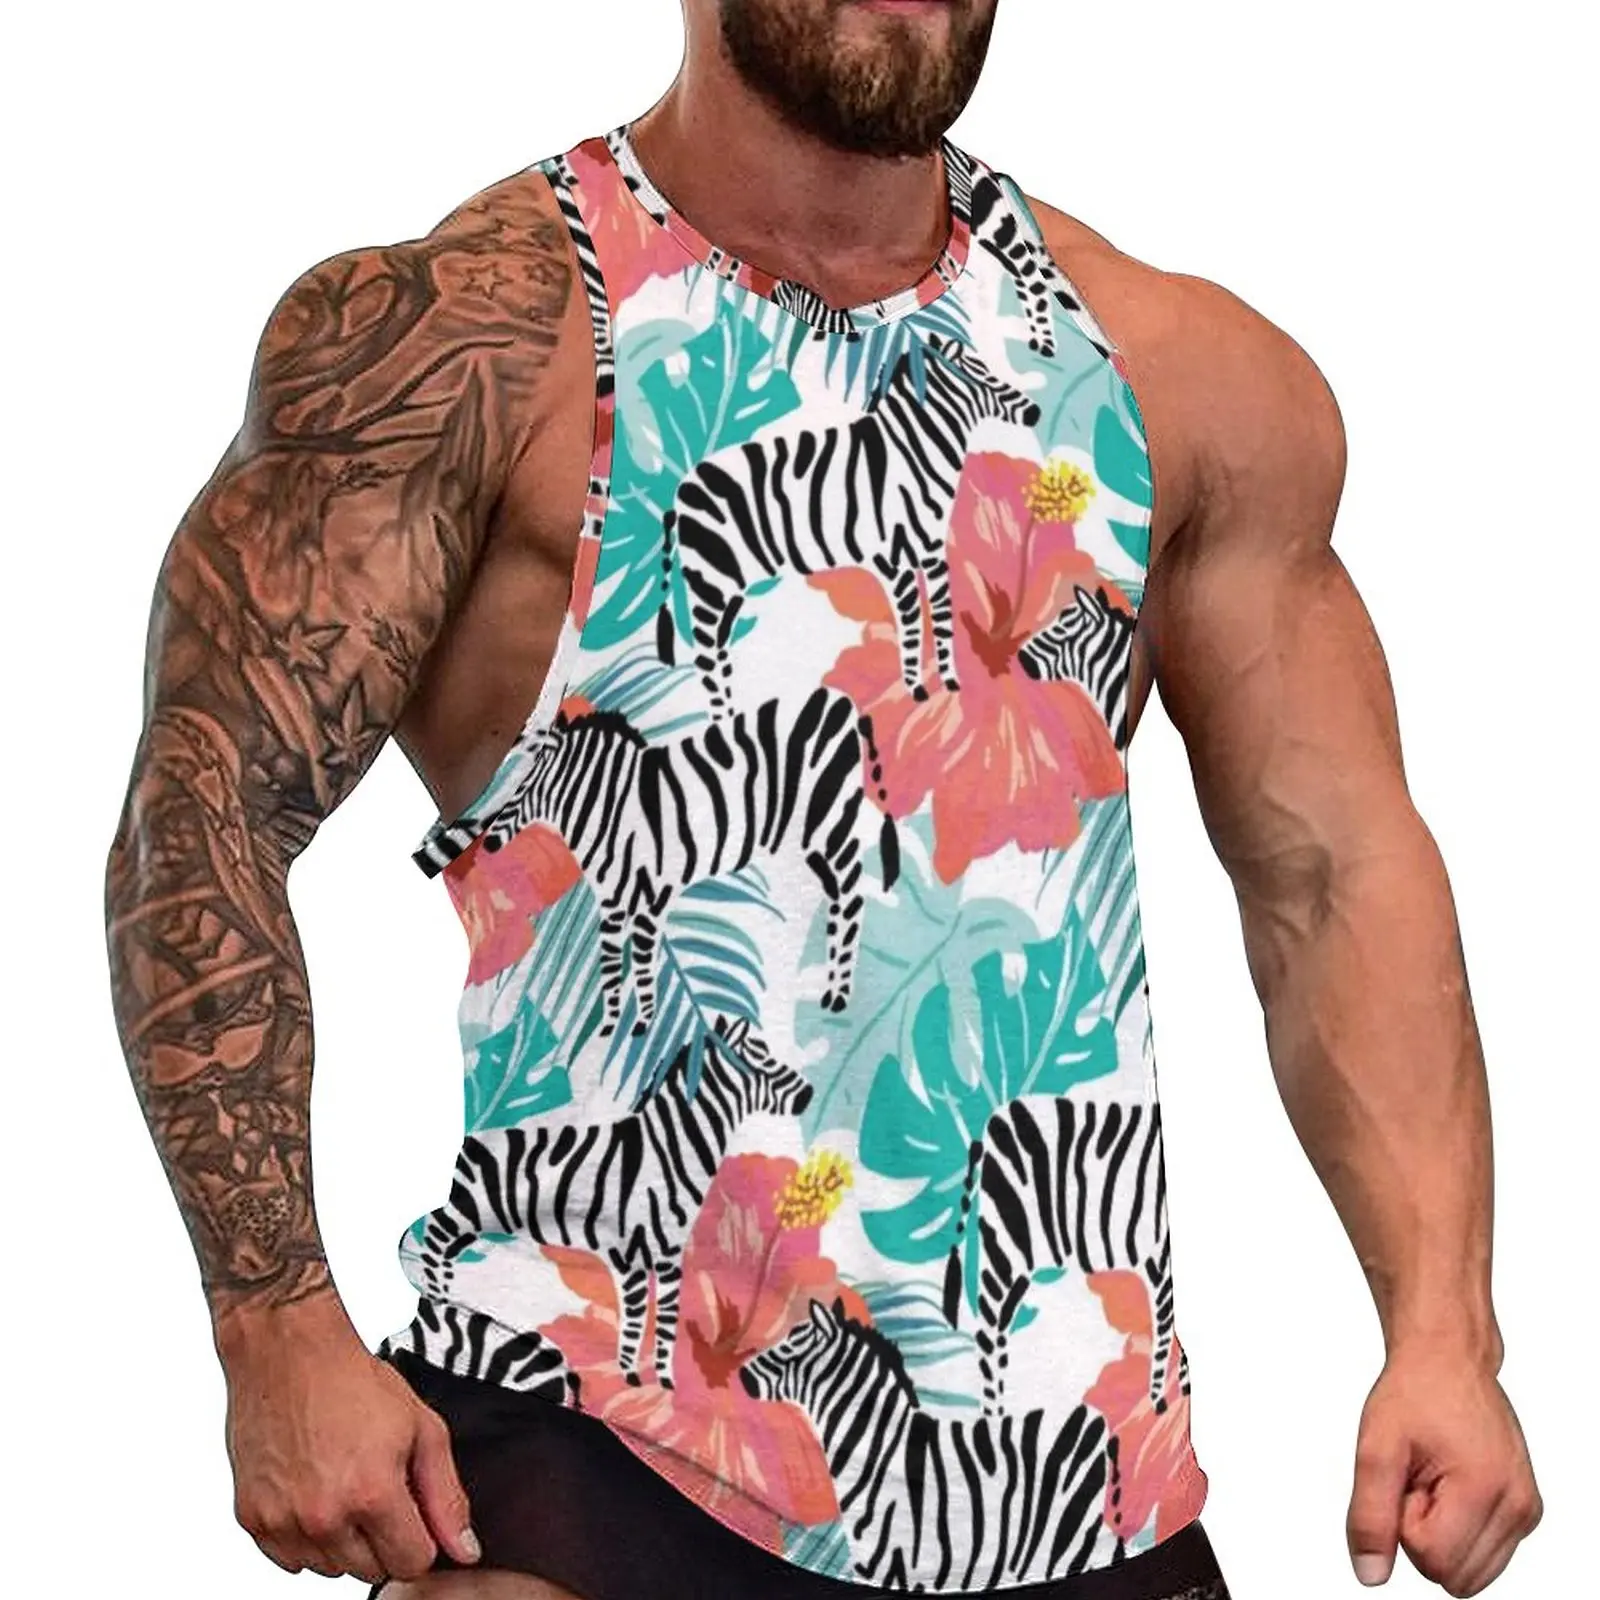 

Zebra Vintage Tank Top Man's Hibiscus Flowers and Palm Leaf Trendy Tops Beach Workout Custom Sleeveless Shirts Plus Size 4XL 5XL